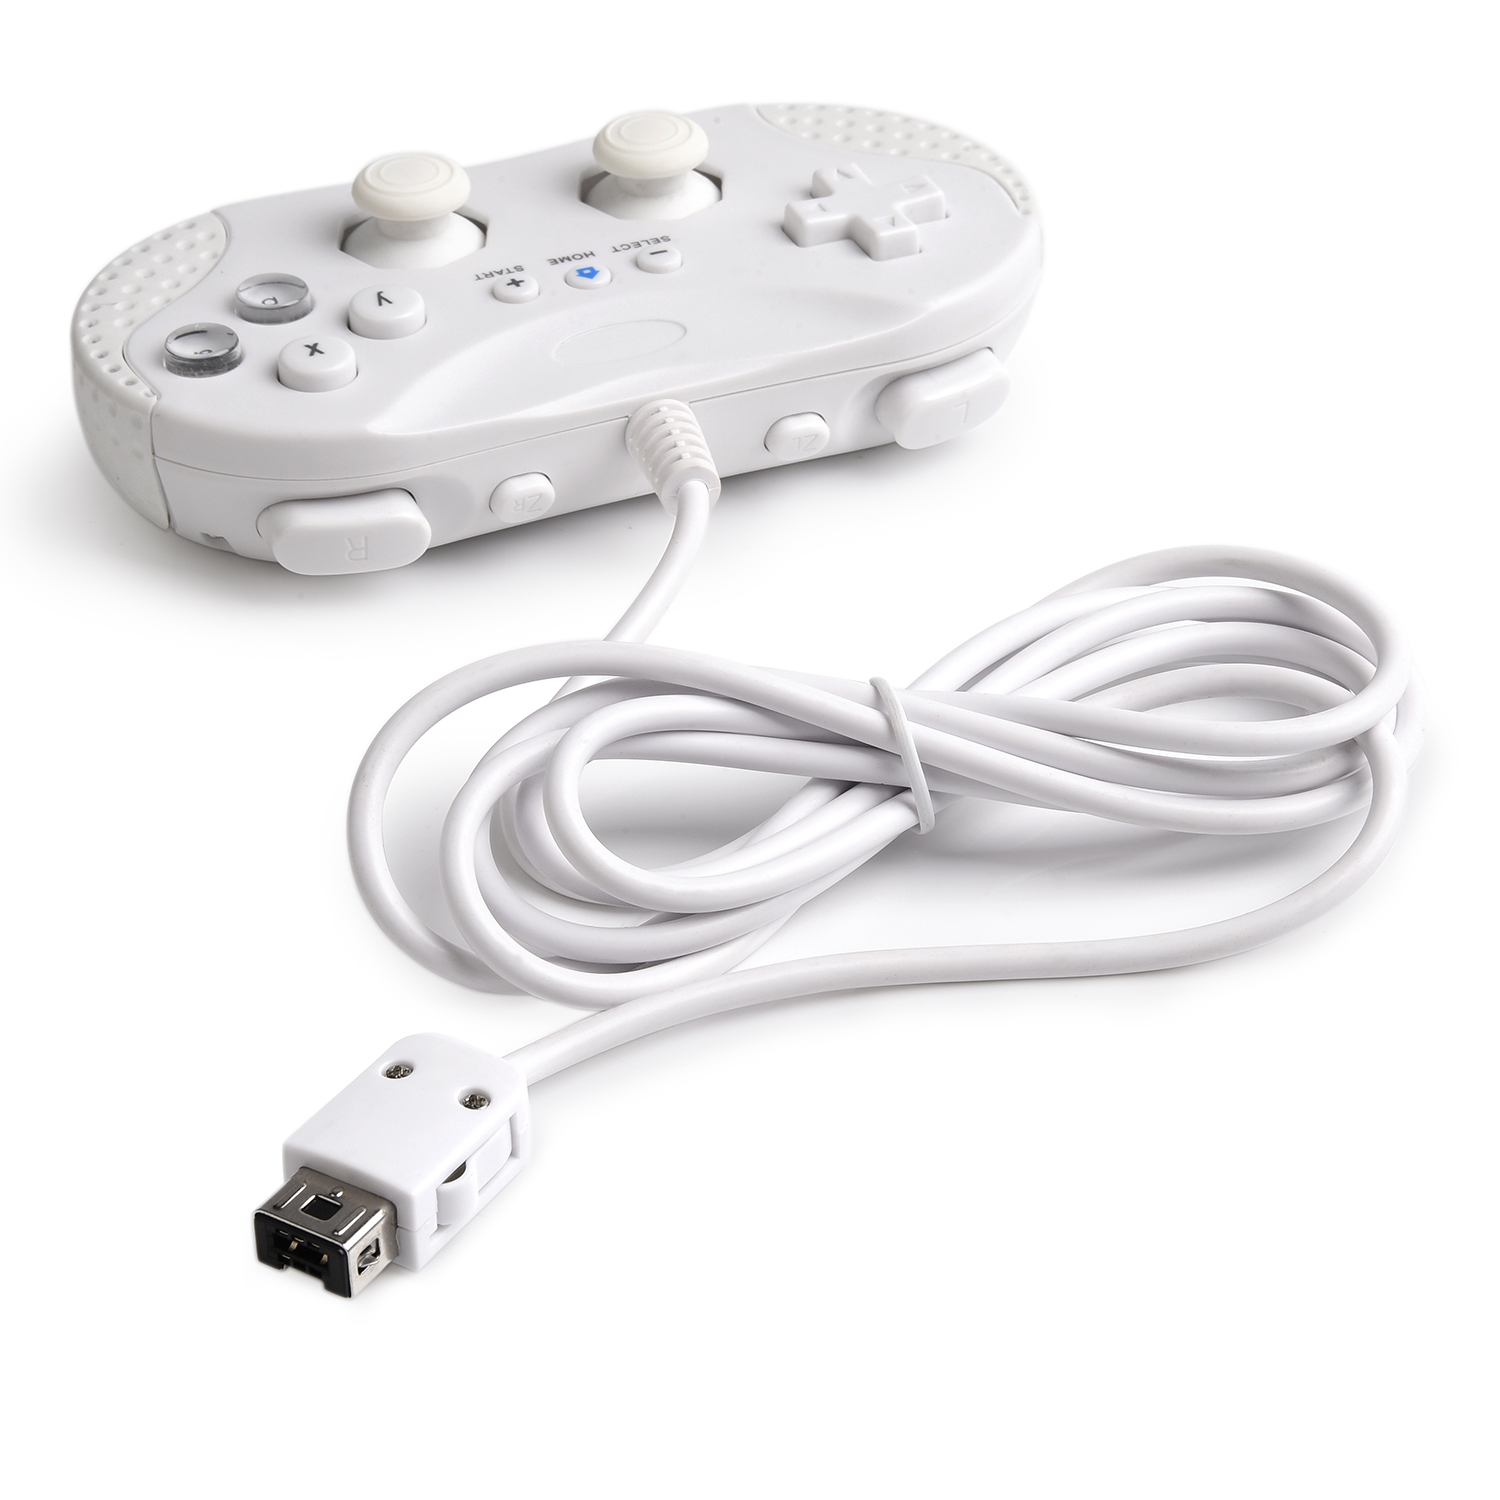 LUXMO Classic Controller Console Gampad/Joypad for Nintendo Wii/Wii U/NES Classic Edition (NES Mini)(White) - image 5 of 5